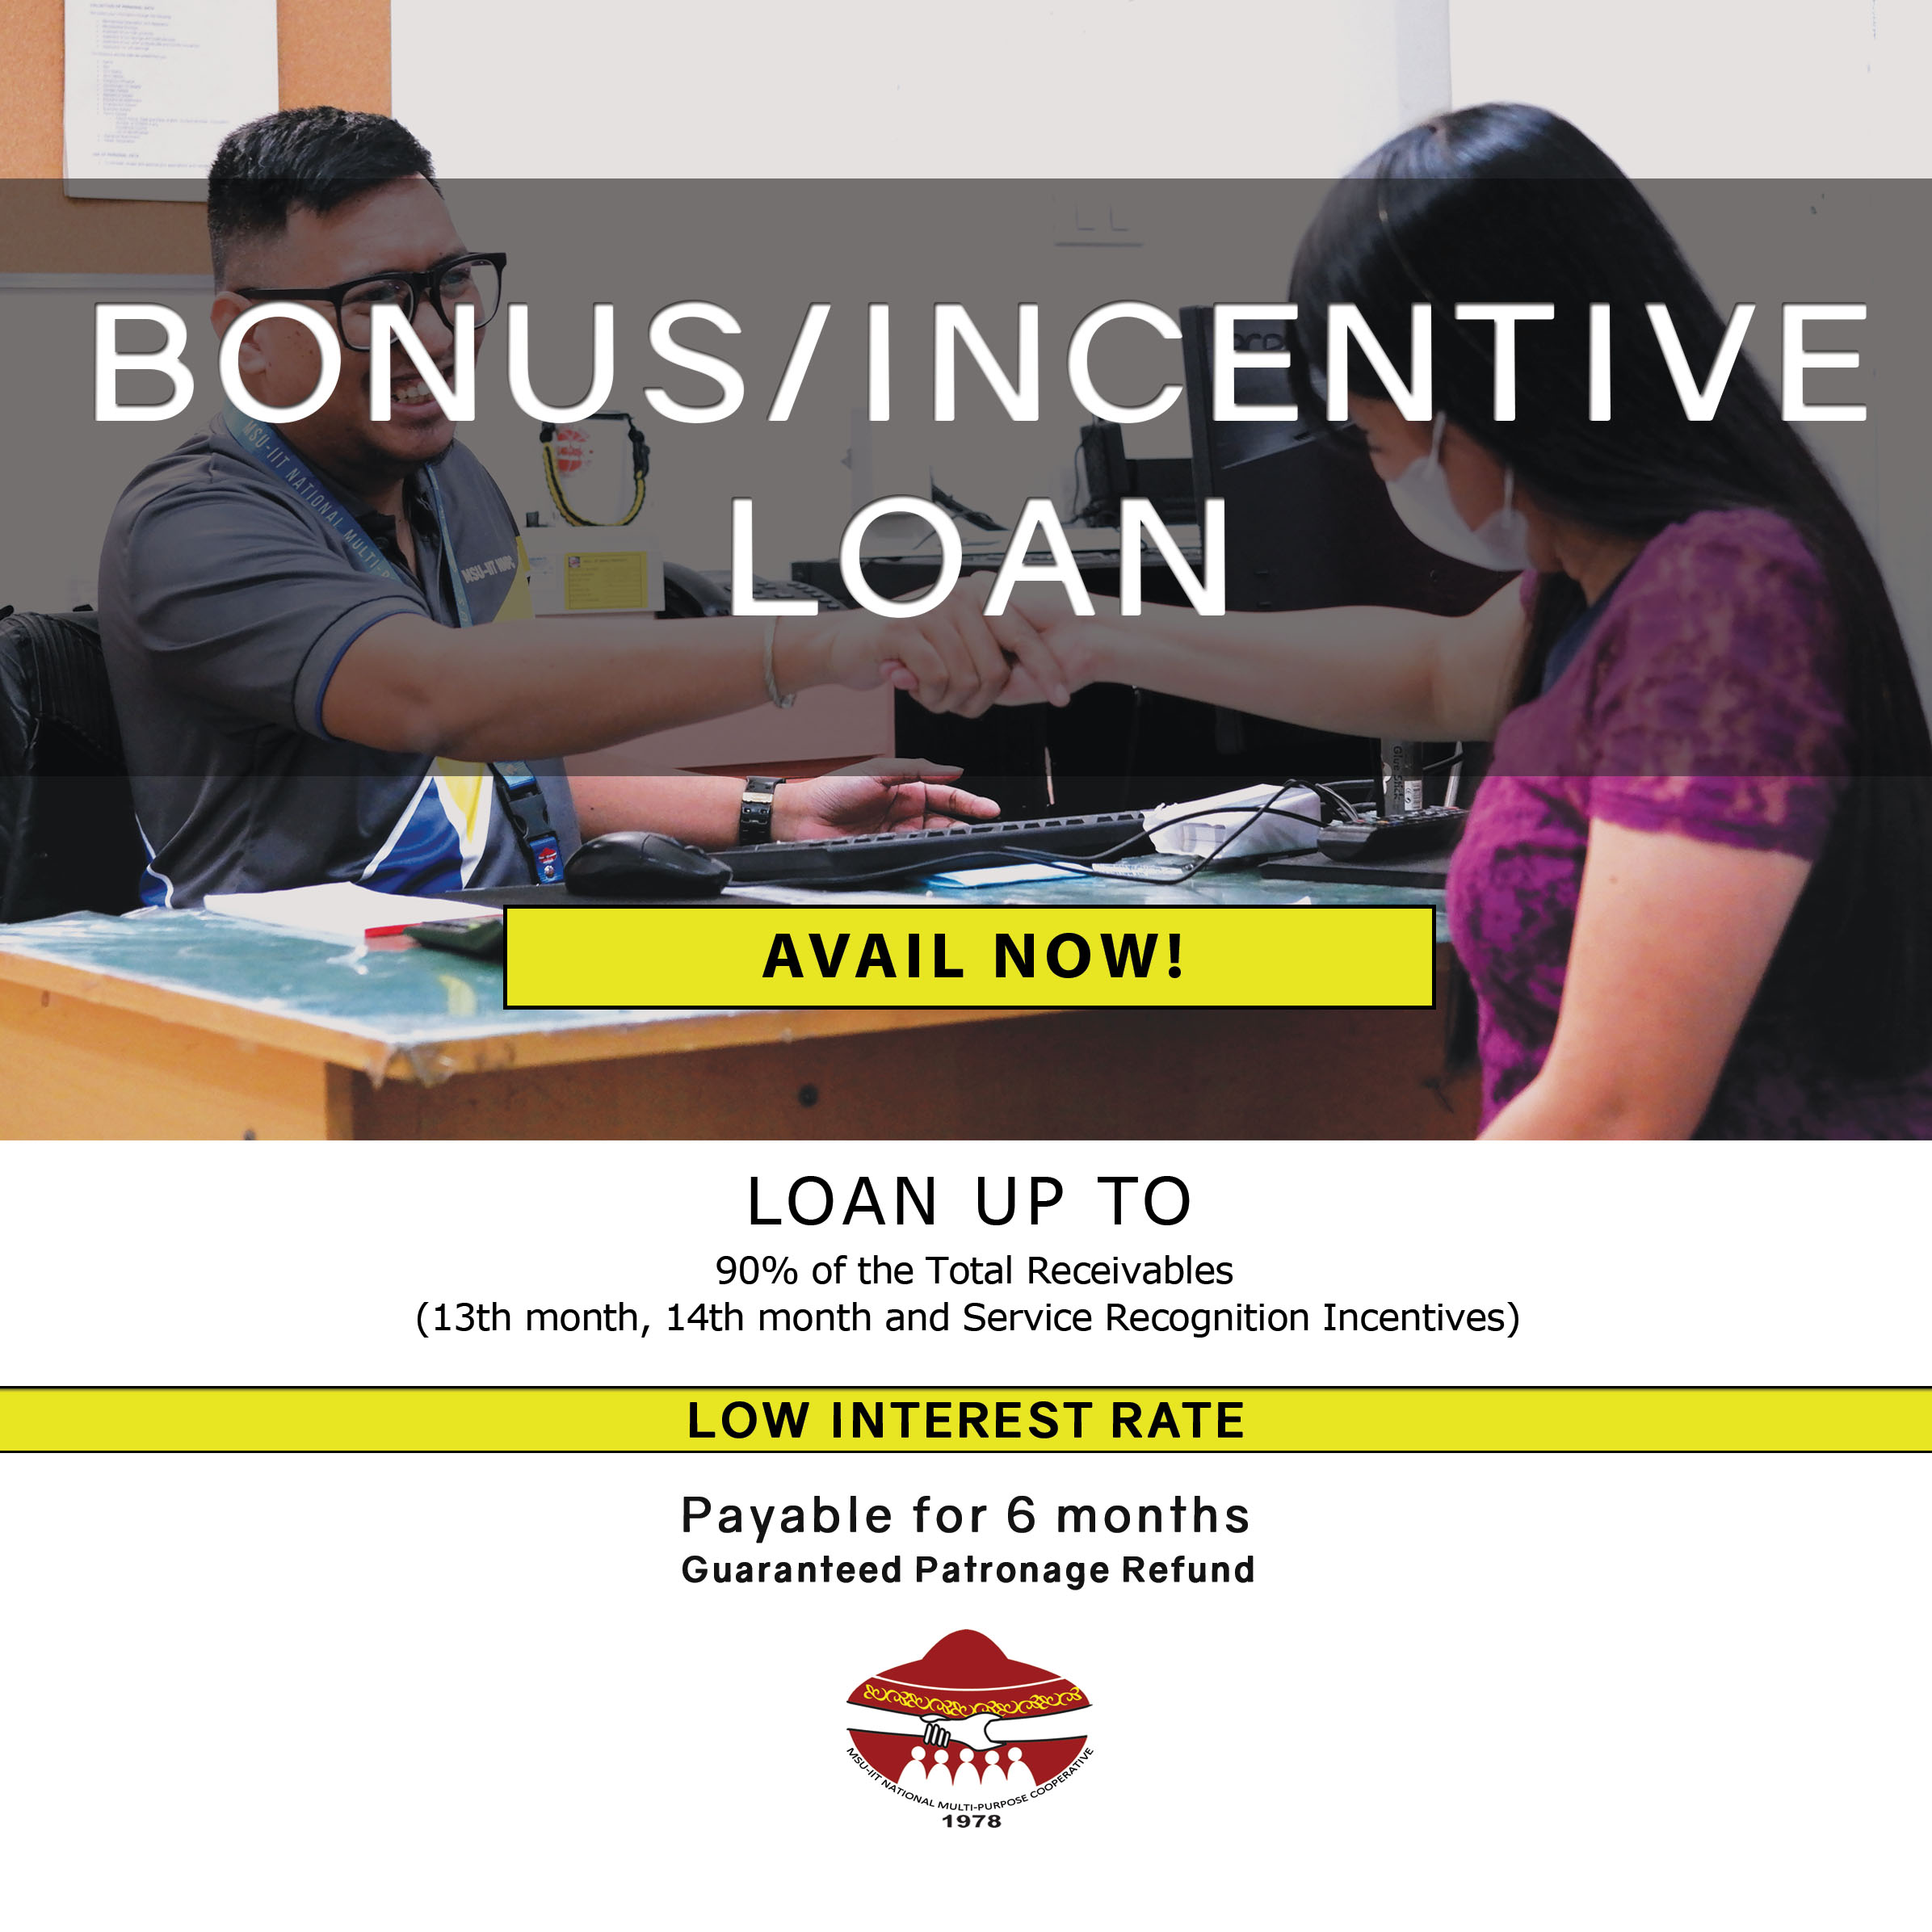 Bonus/Incentive Loan